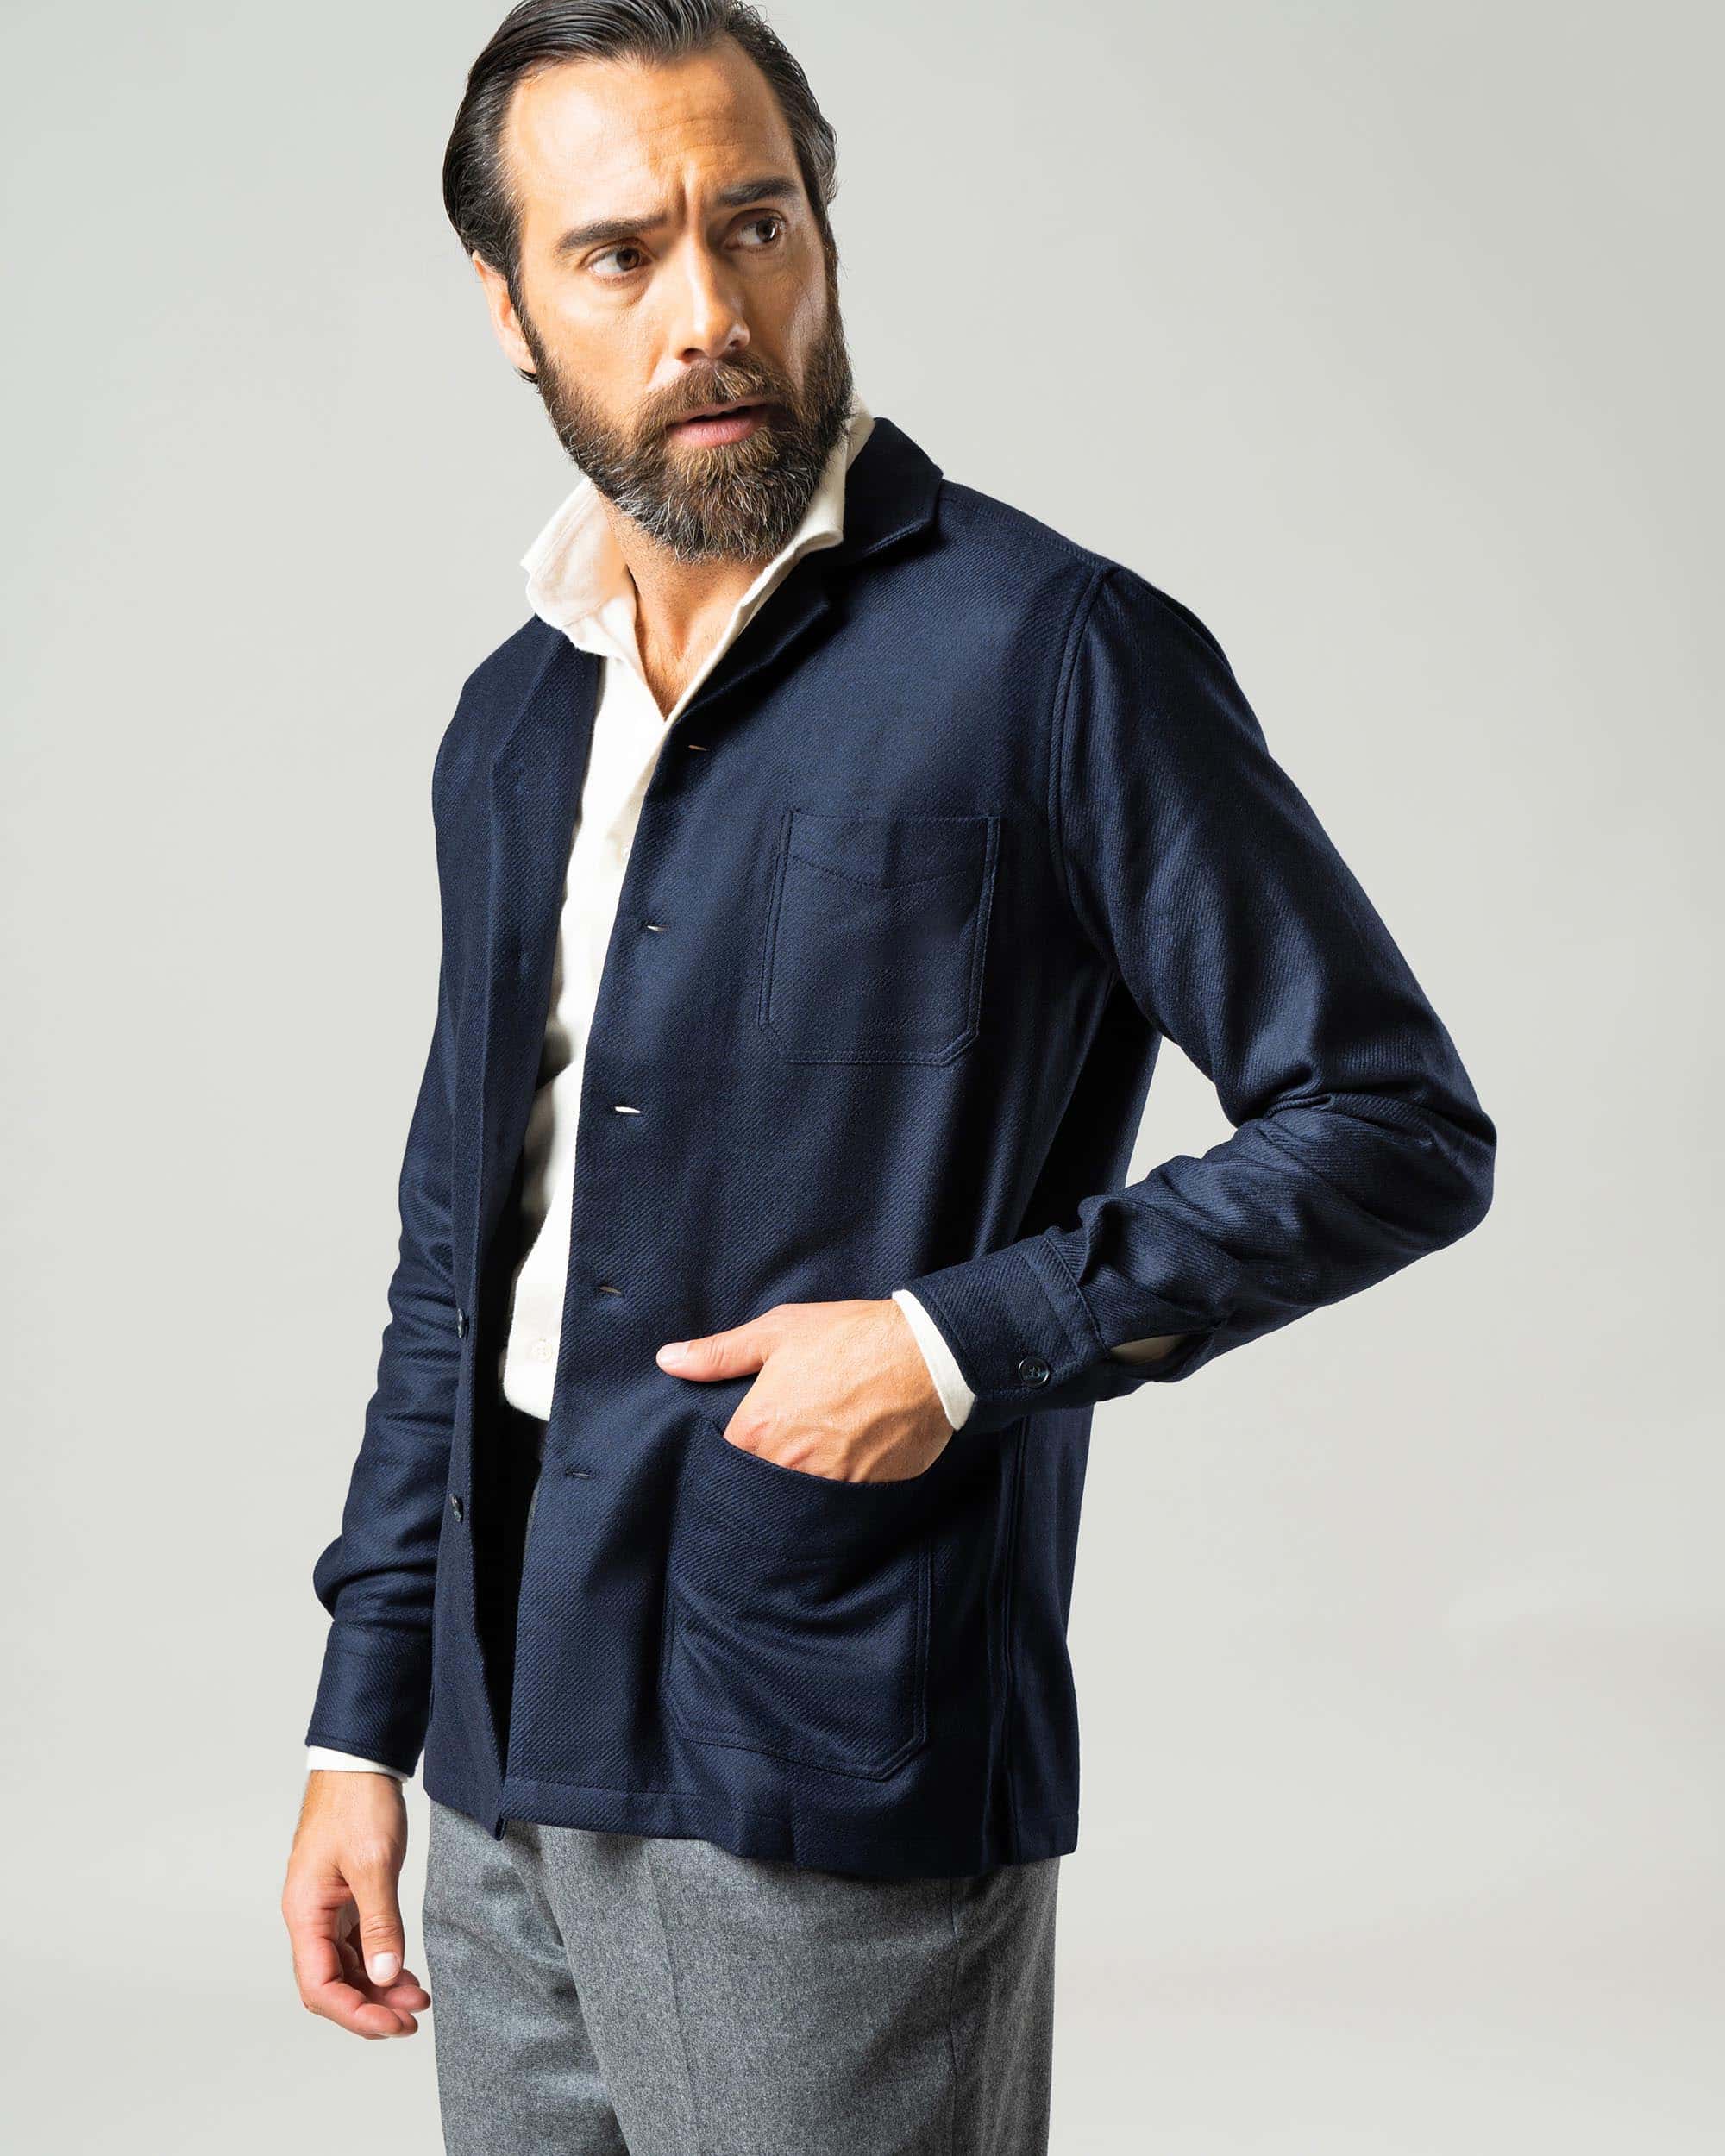 Shirt jacket wool cashmere dark blue image 1